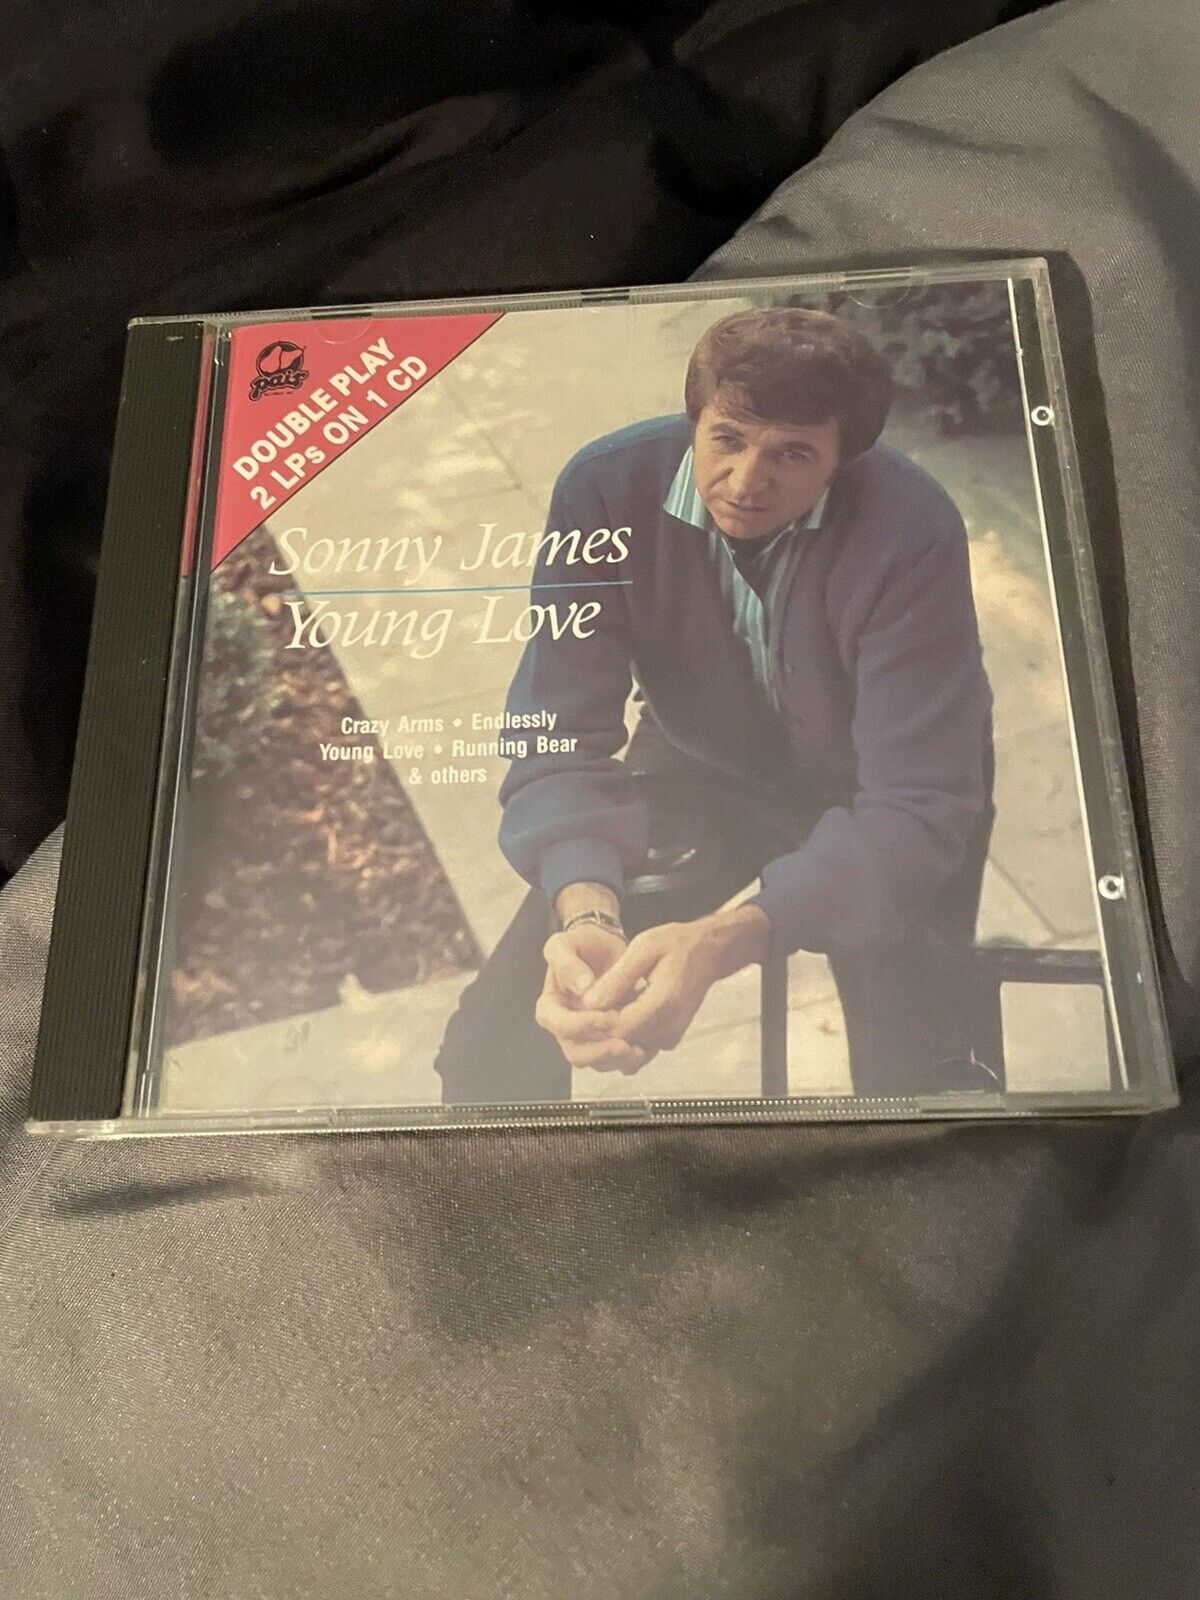 Sonny James - CD -2 LPS On 1 CD Sonny James / Young Love